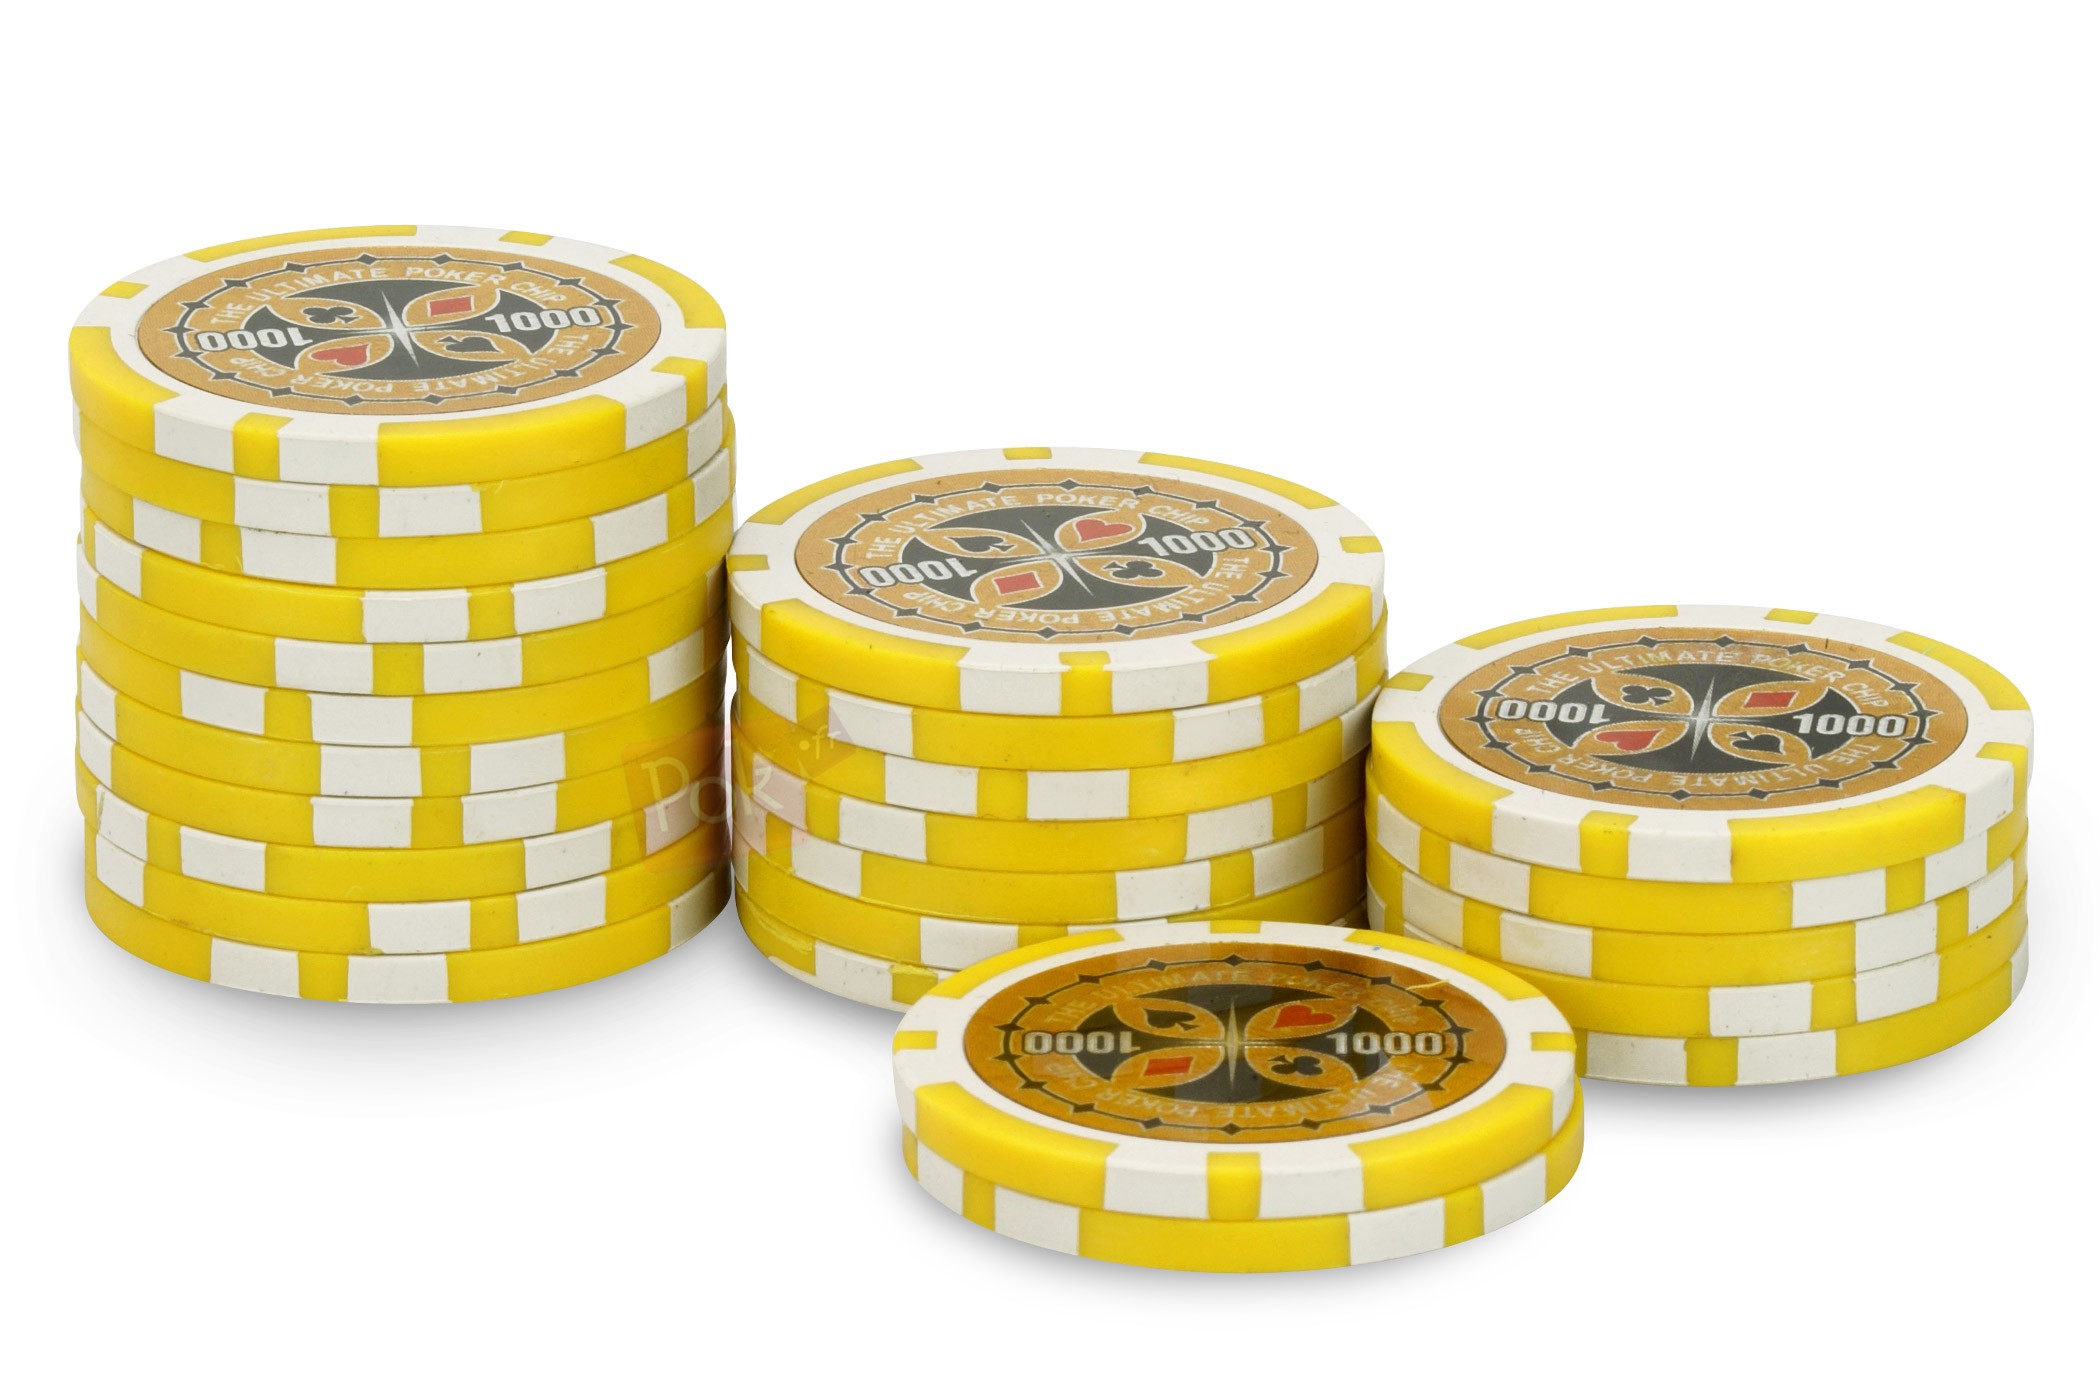 jetons ultimate poker chips